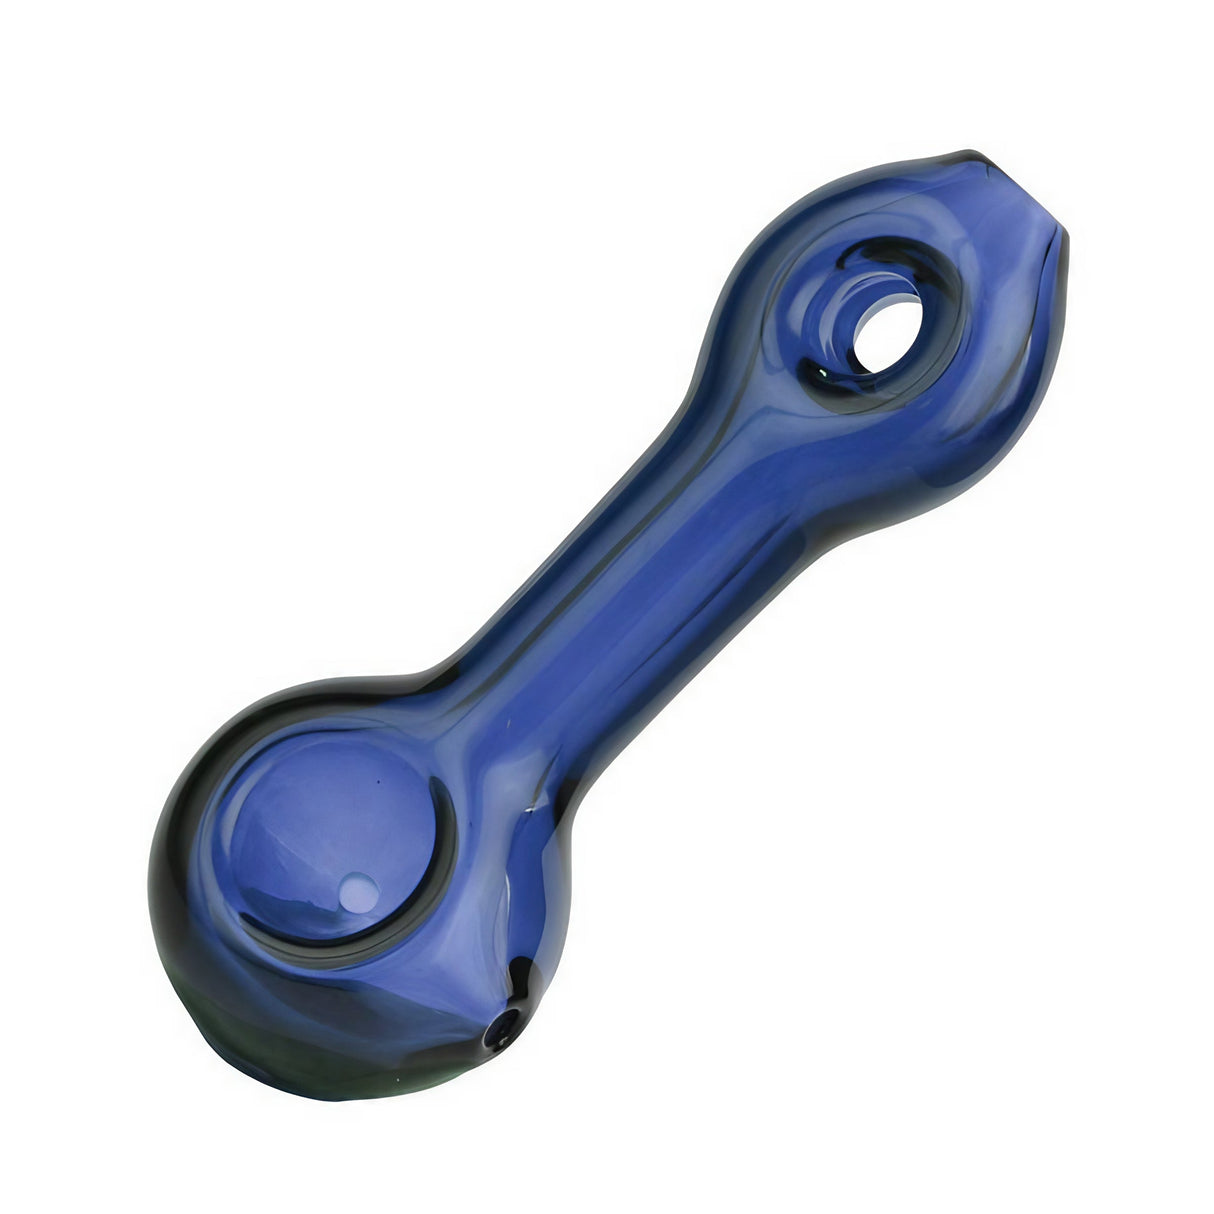 Pulsar Donut Handpipe - 3.5" Borosilicate Glass Spoon Pipe in Assorted Colors